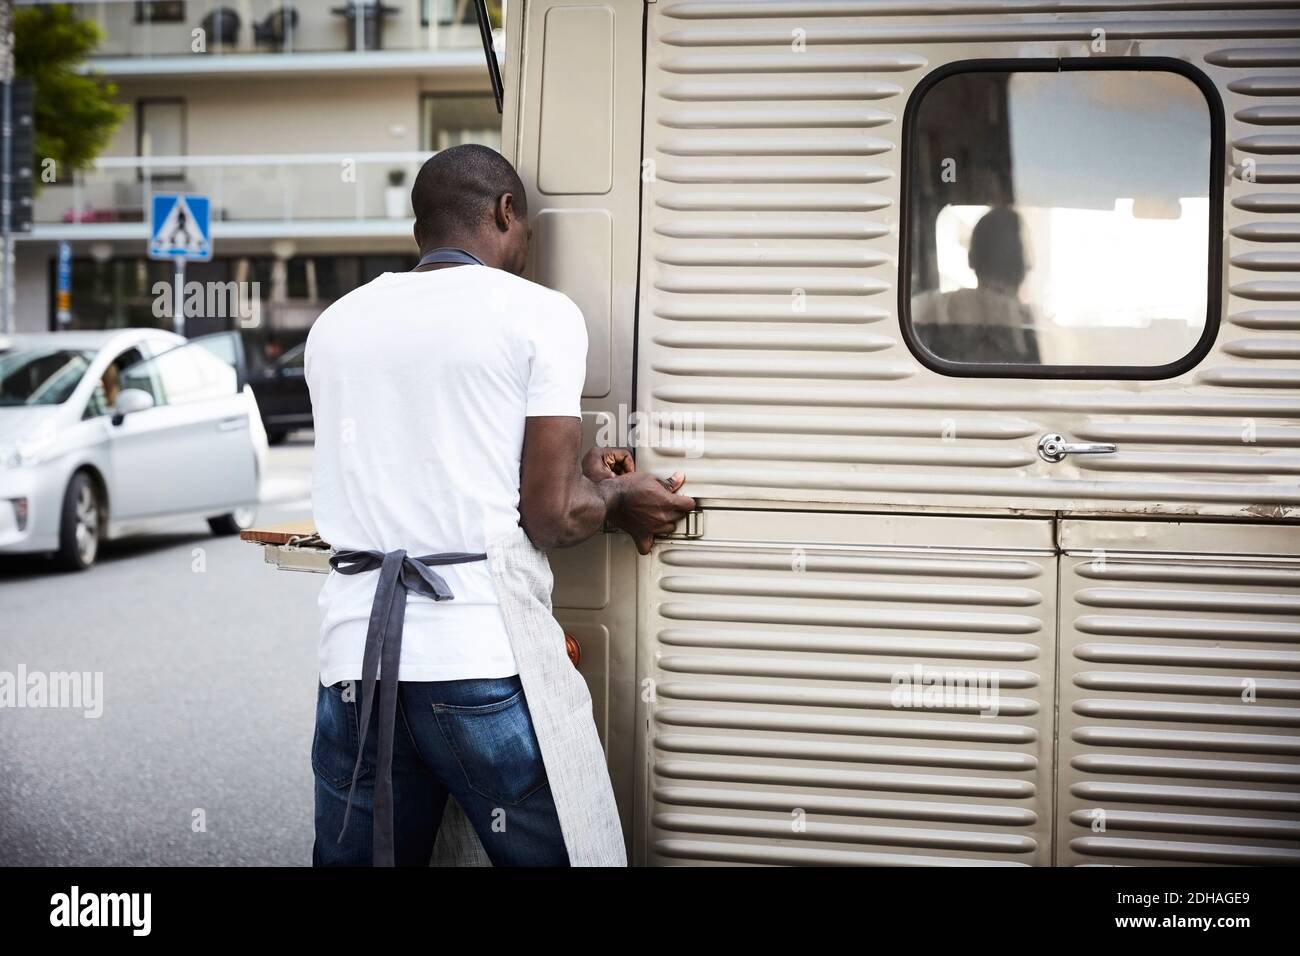 Male owner unlocking door of food truck on city street Stock Photo